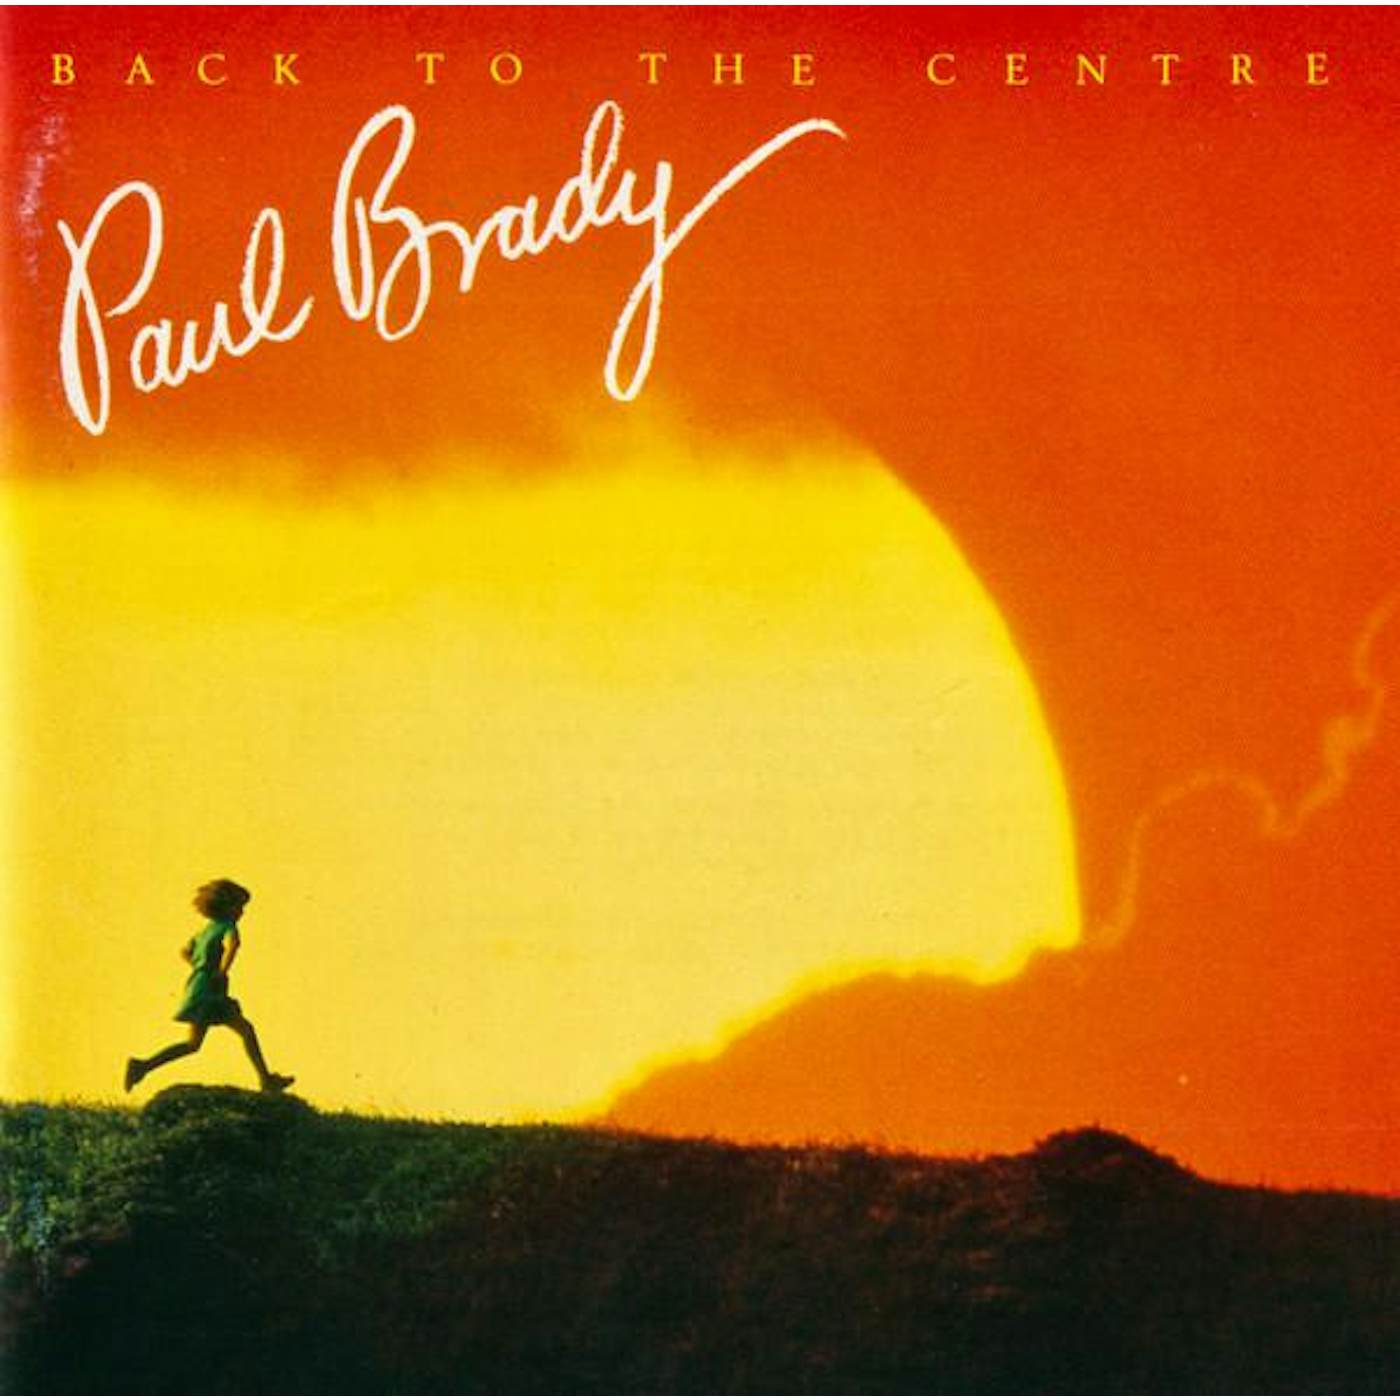 Paul Brady BACK TO THE CENTRE CD